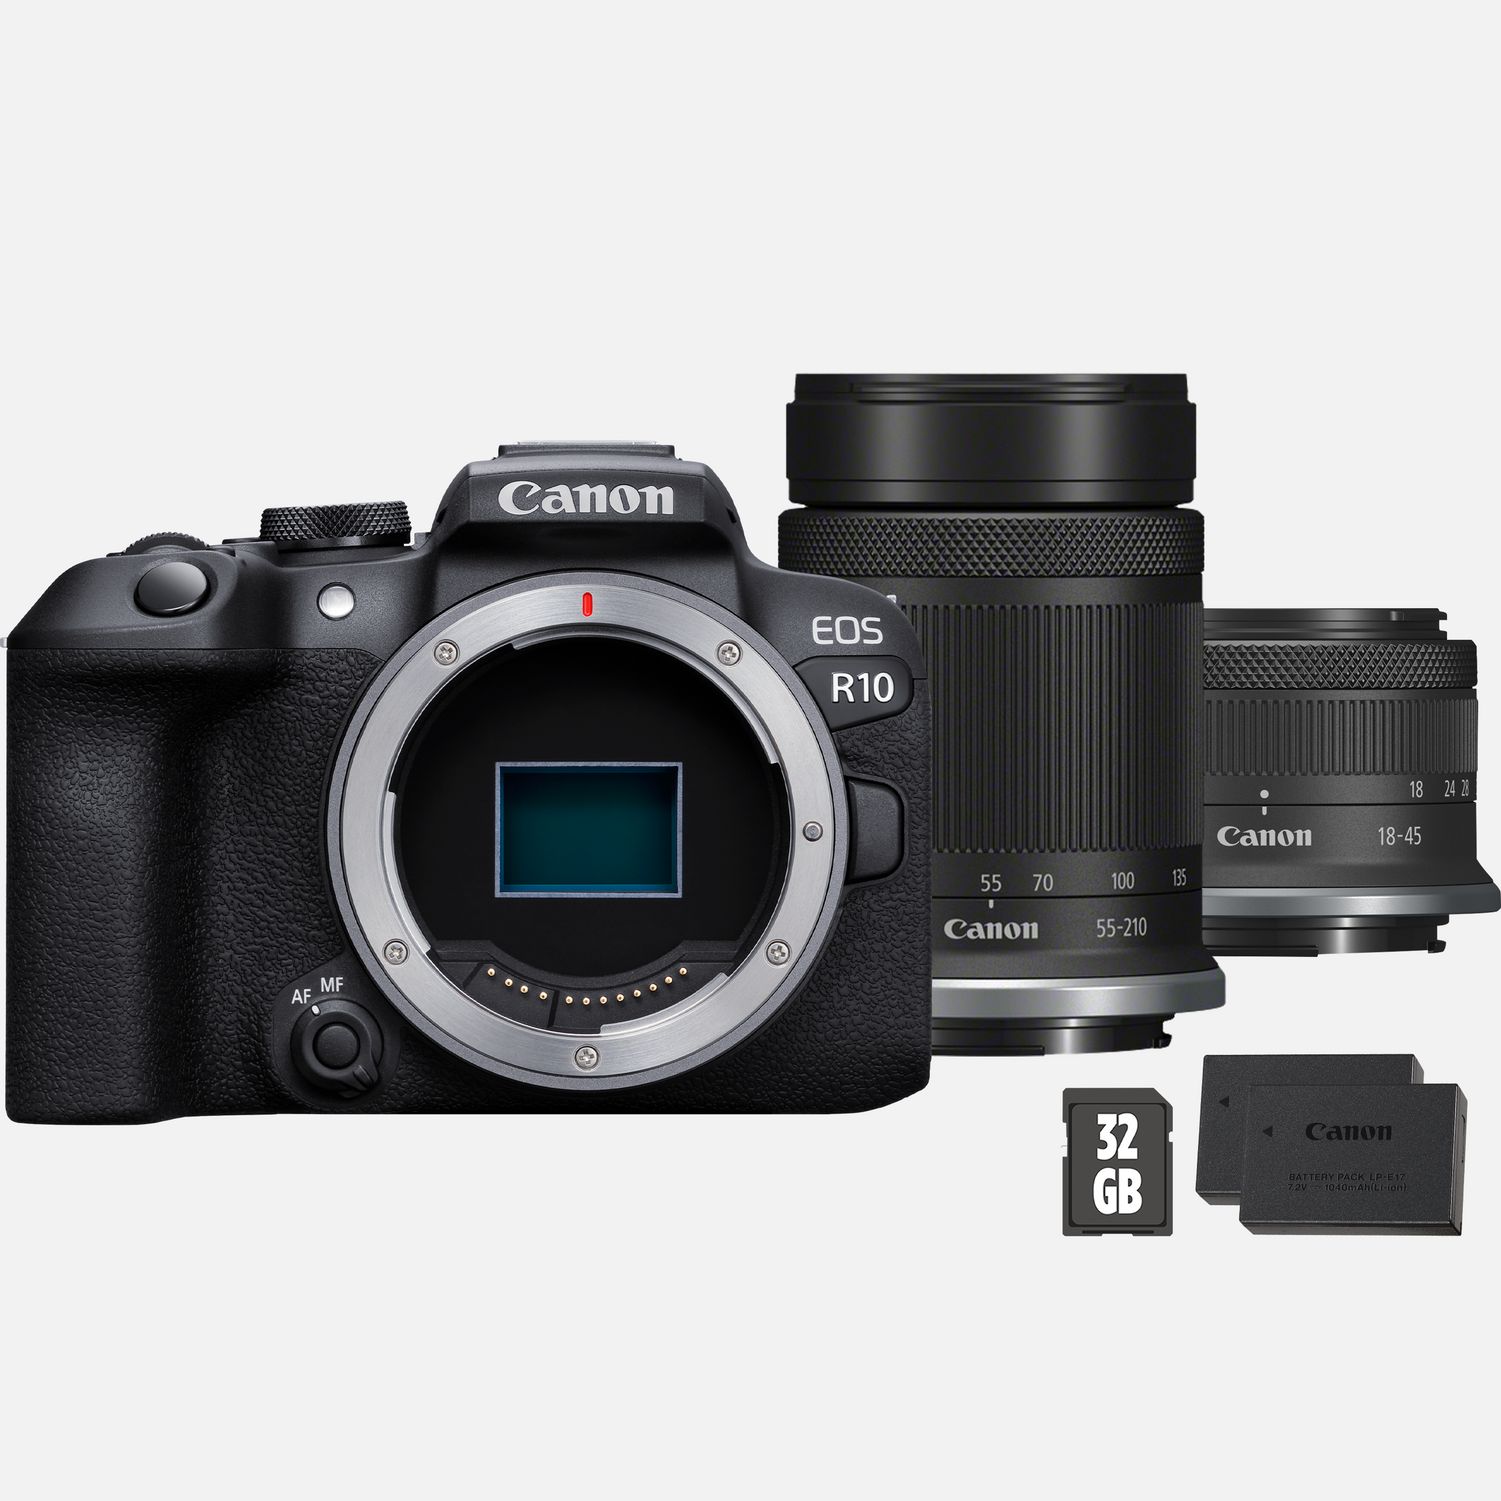 Buy Canon EOS R10 spiegellose Kamera + RF-S 55-210mm Objektiv + RF-S 18-45mm  Objektiv + SD-Karte + Ersatzakku in WLAN-Kameras — Canon Schweiz Shop